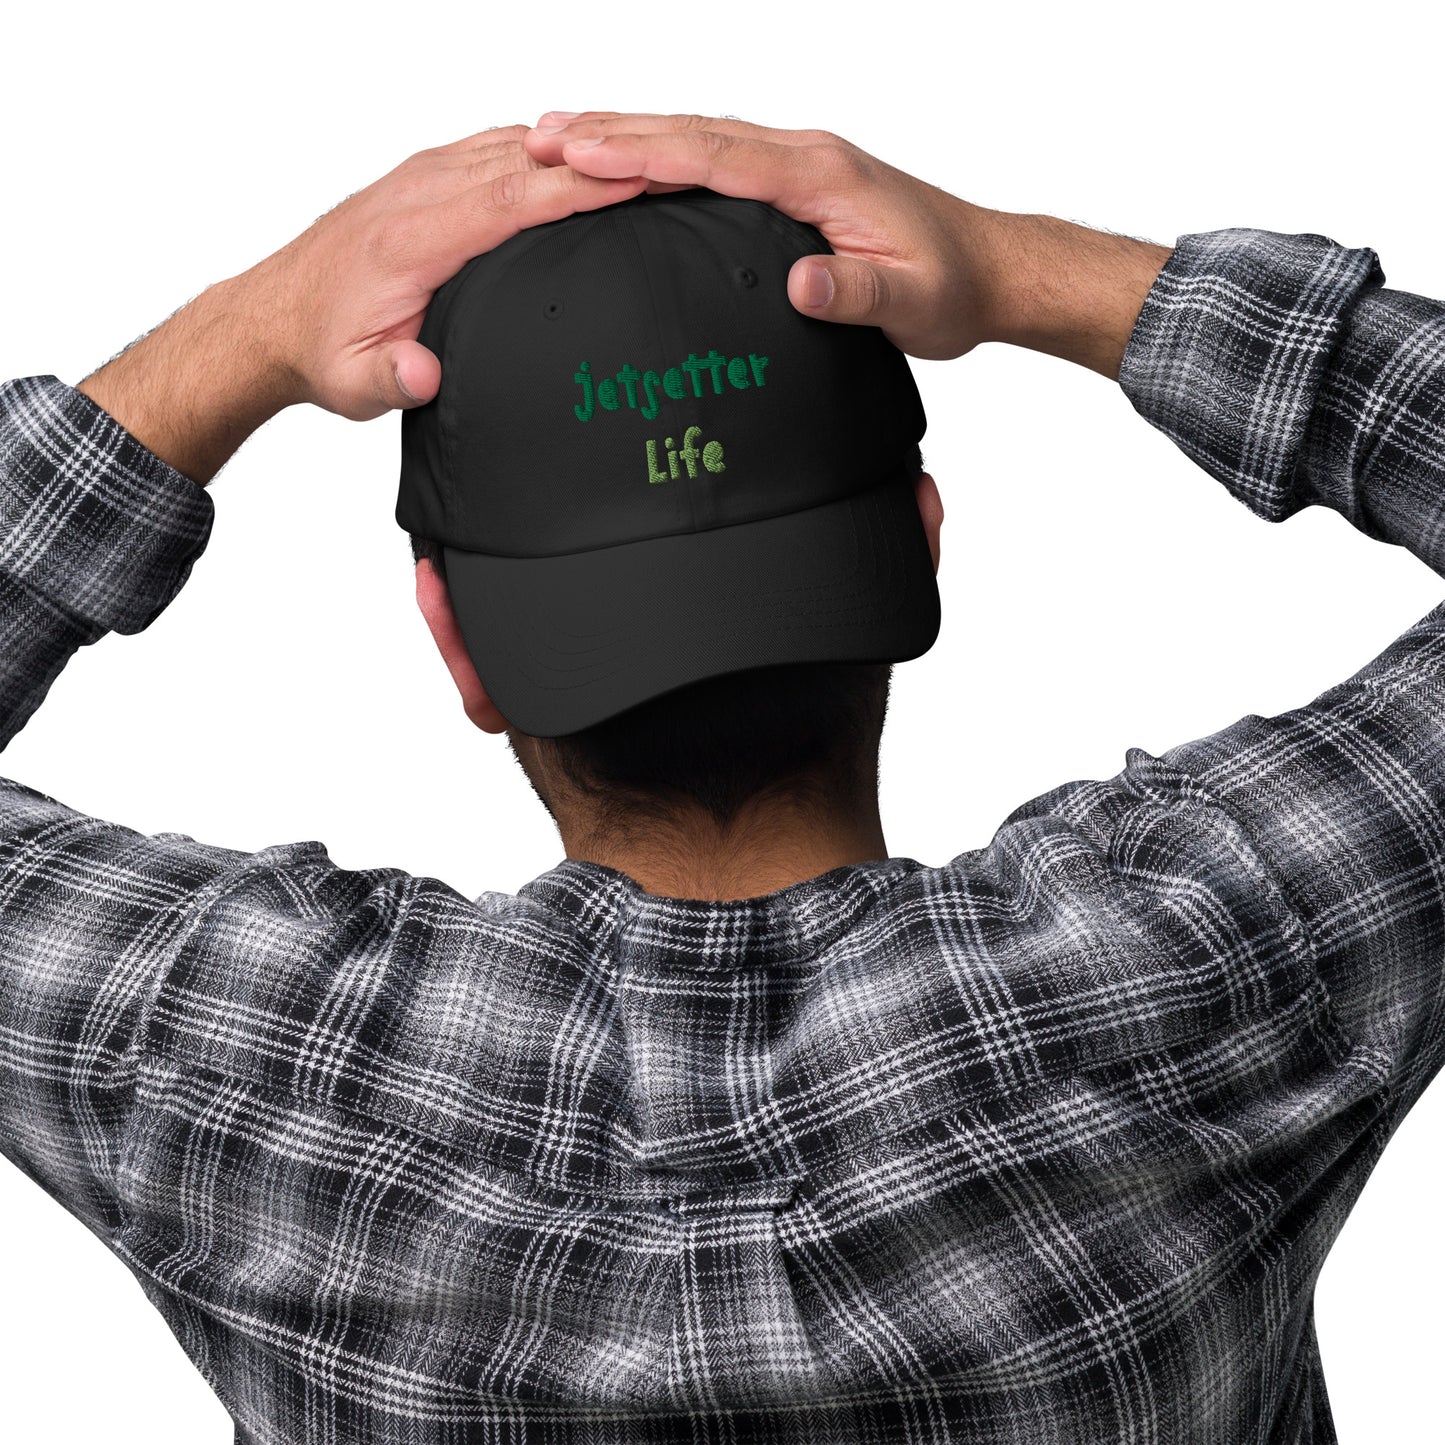 Jetsetter Life Dad Hat: Stylish Headgear for the Modern Traveler